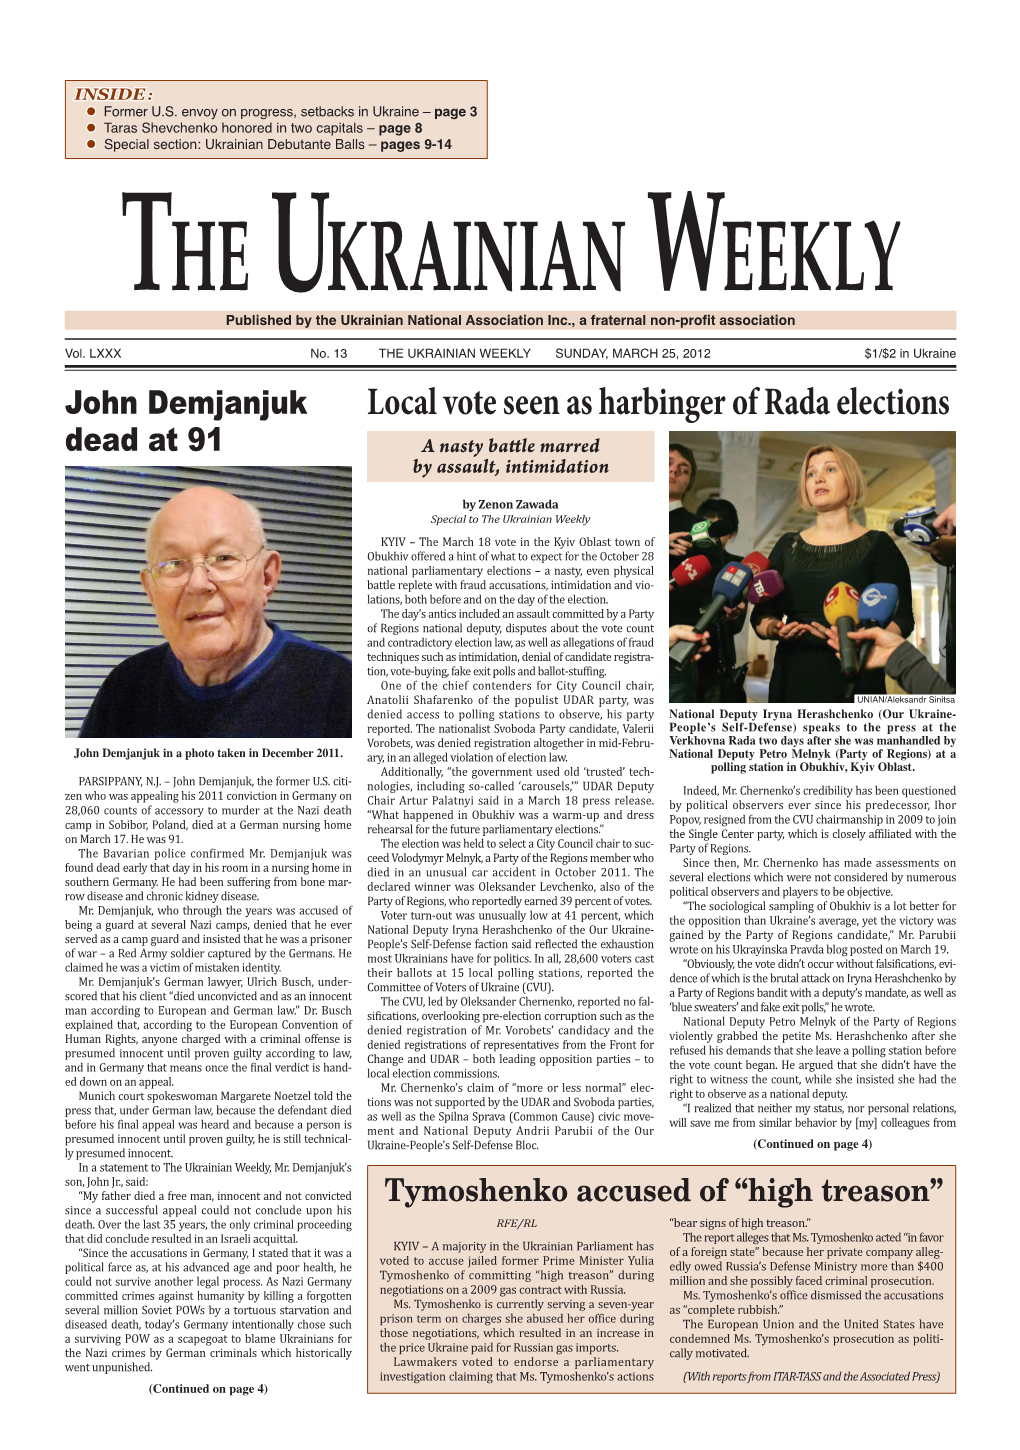 The Ukrainian Weekly 2012, No.13